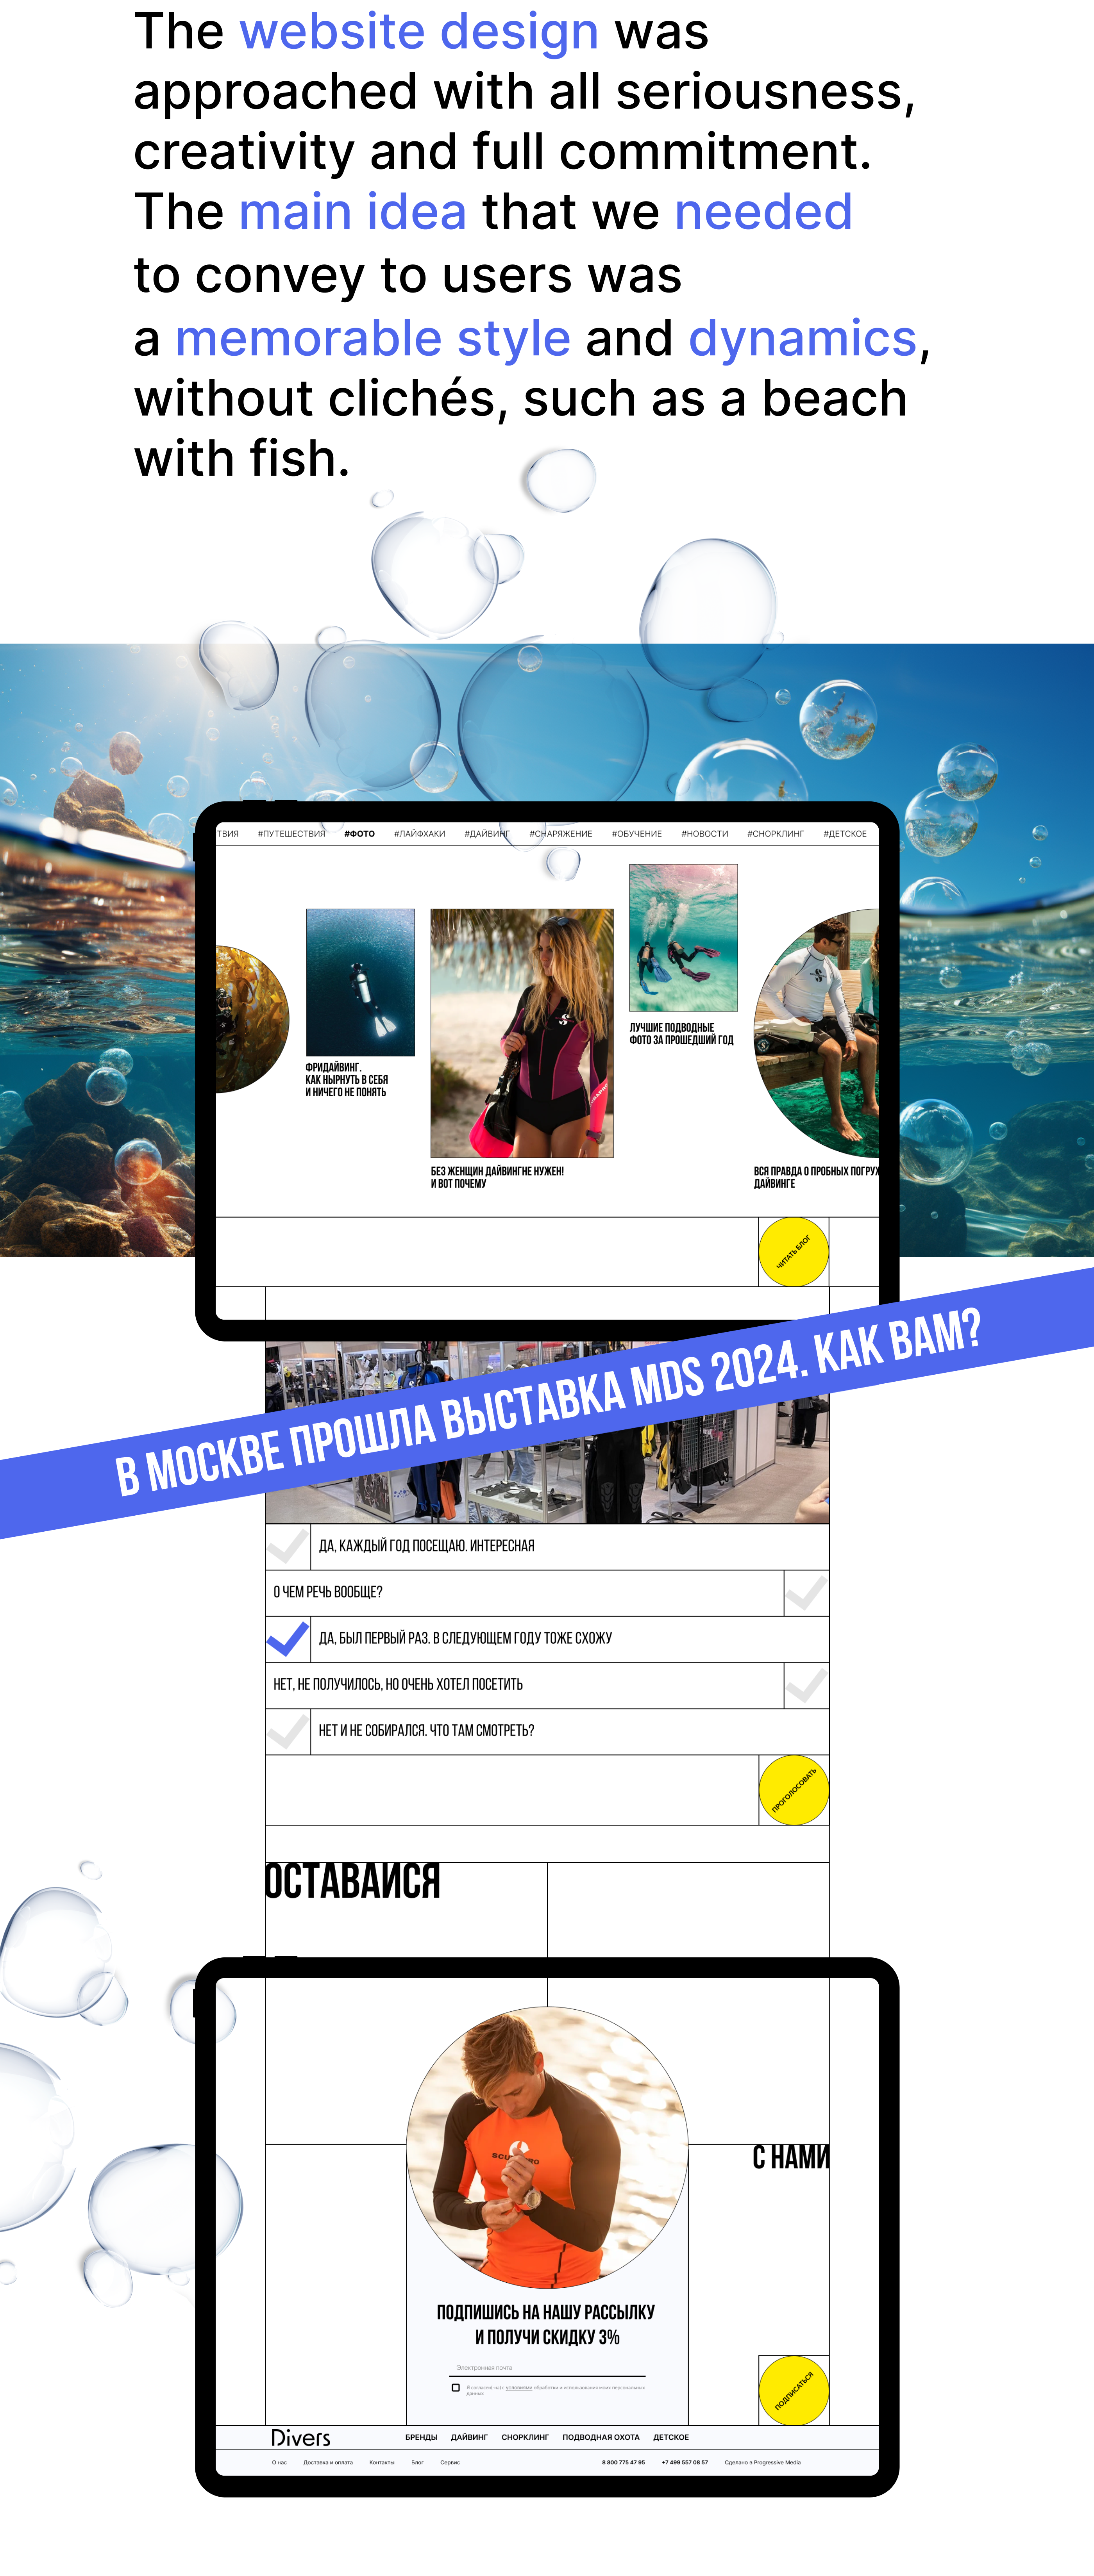 Divers.ru website — Изображение №3 — Интерфейсы на Dprofile